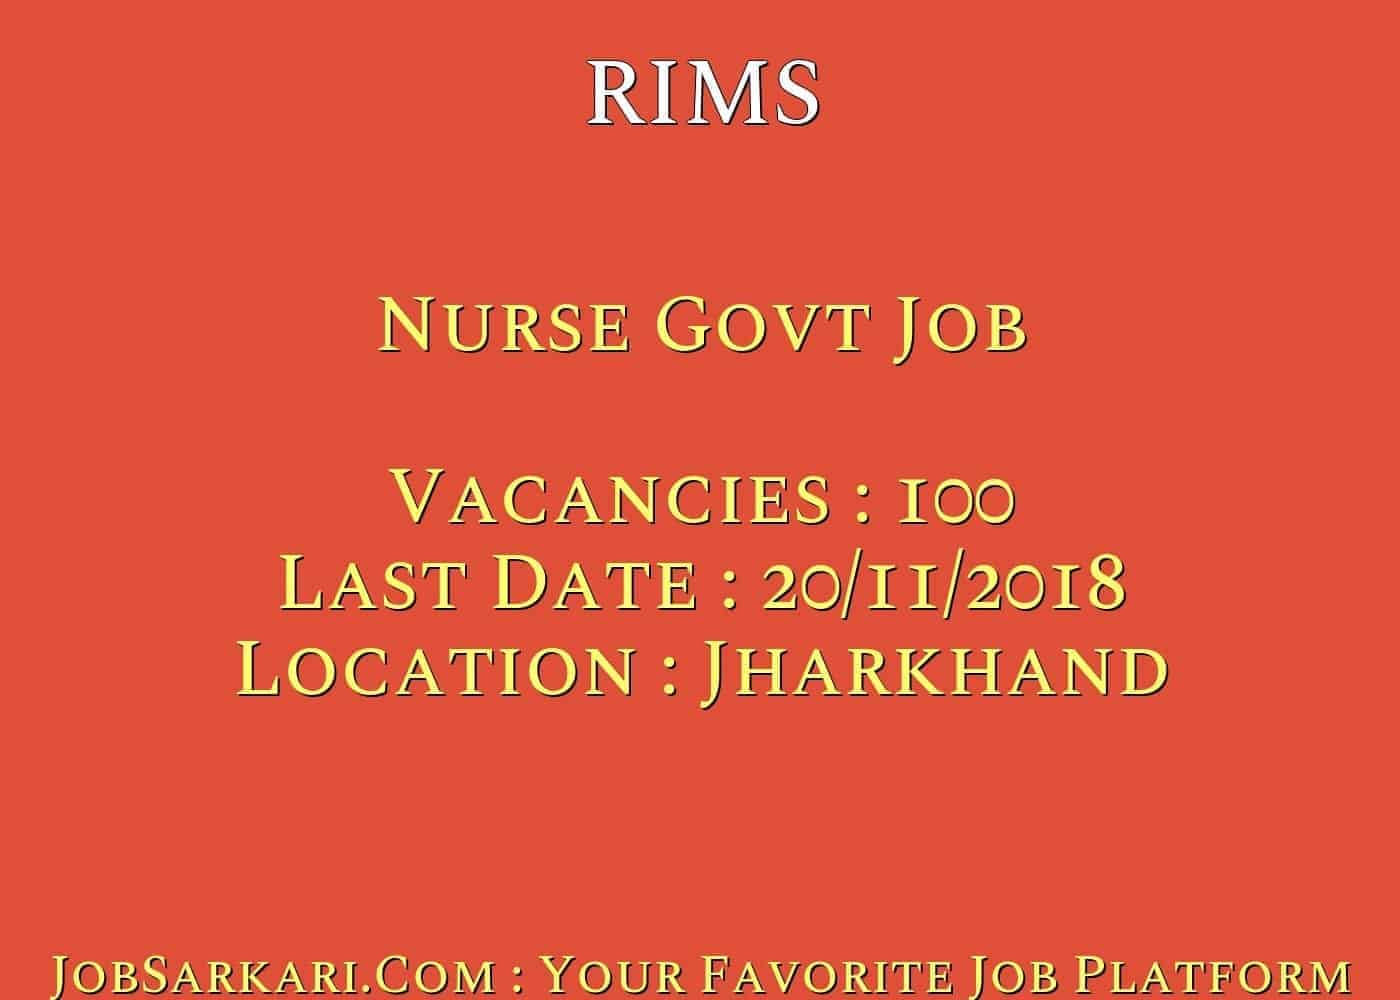 RIMS Recruitment 2018 For Nurse Govt Job